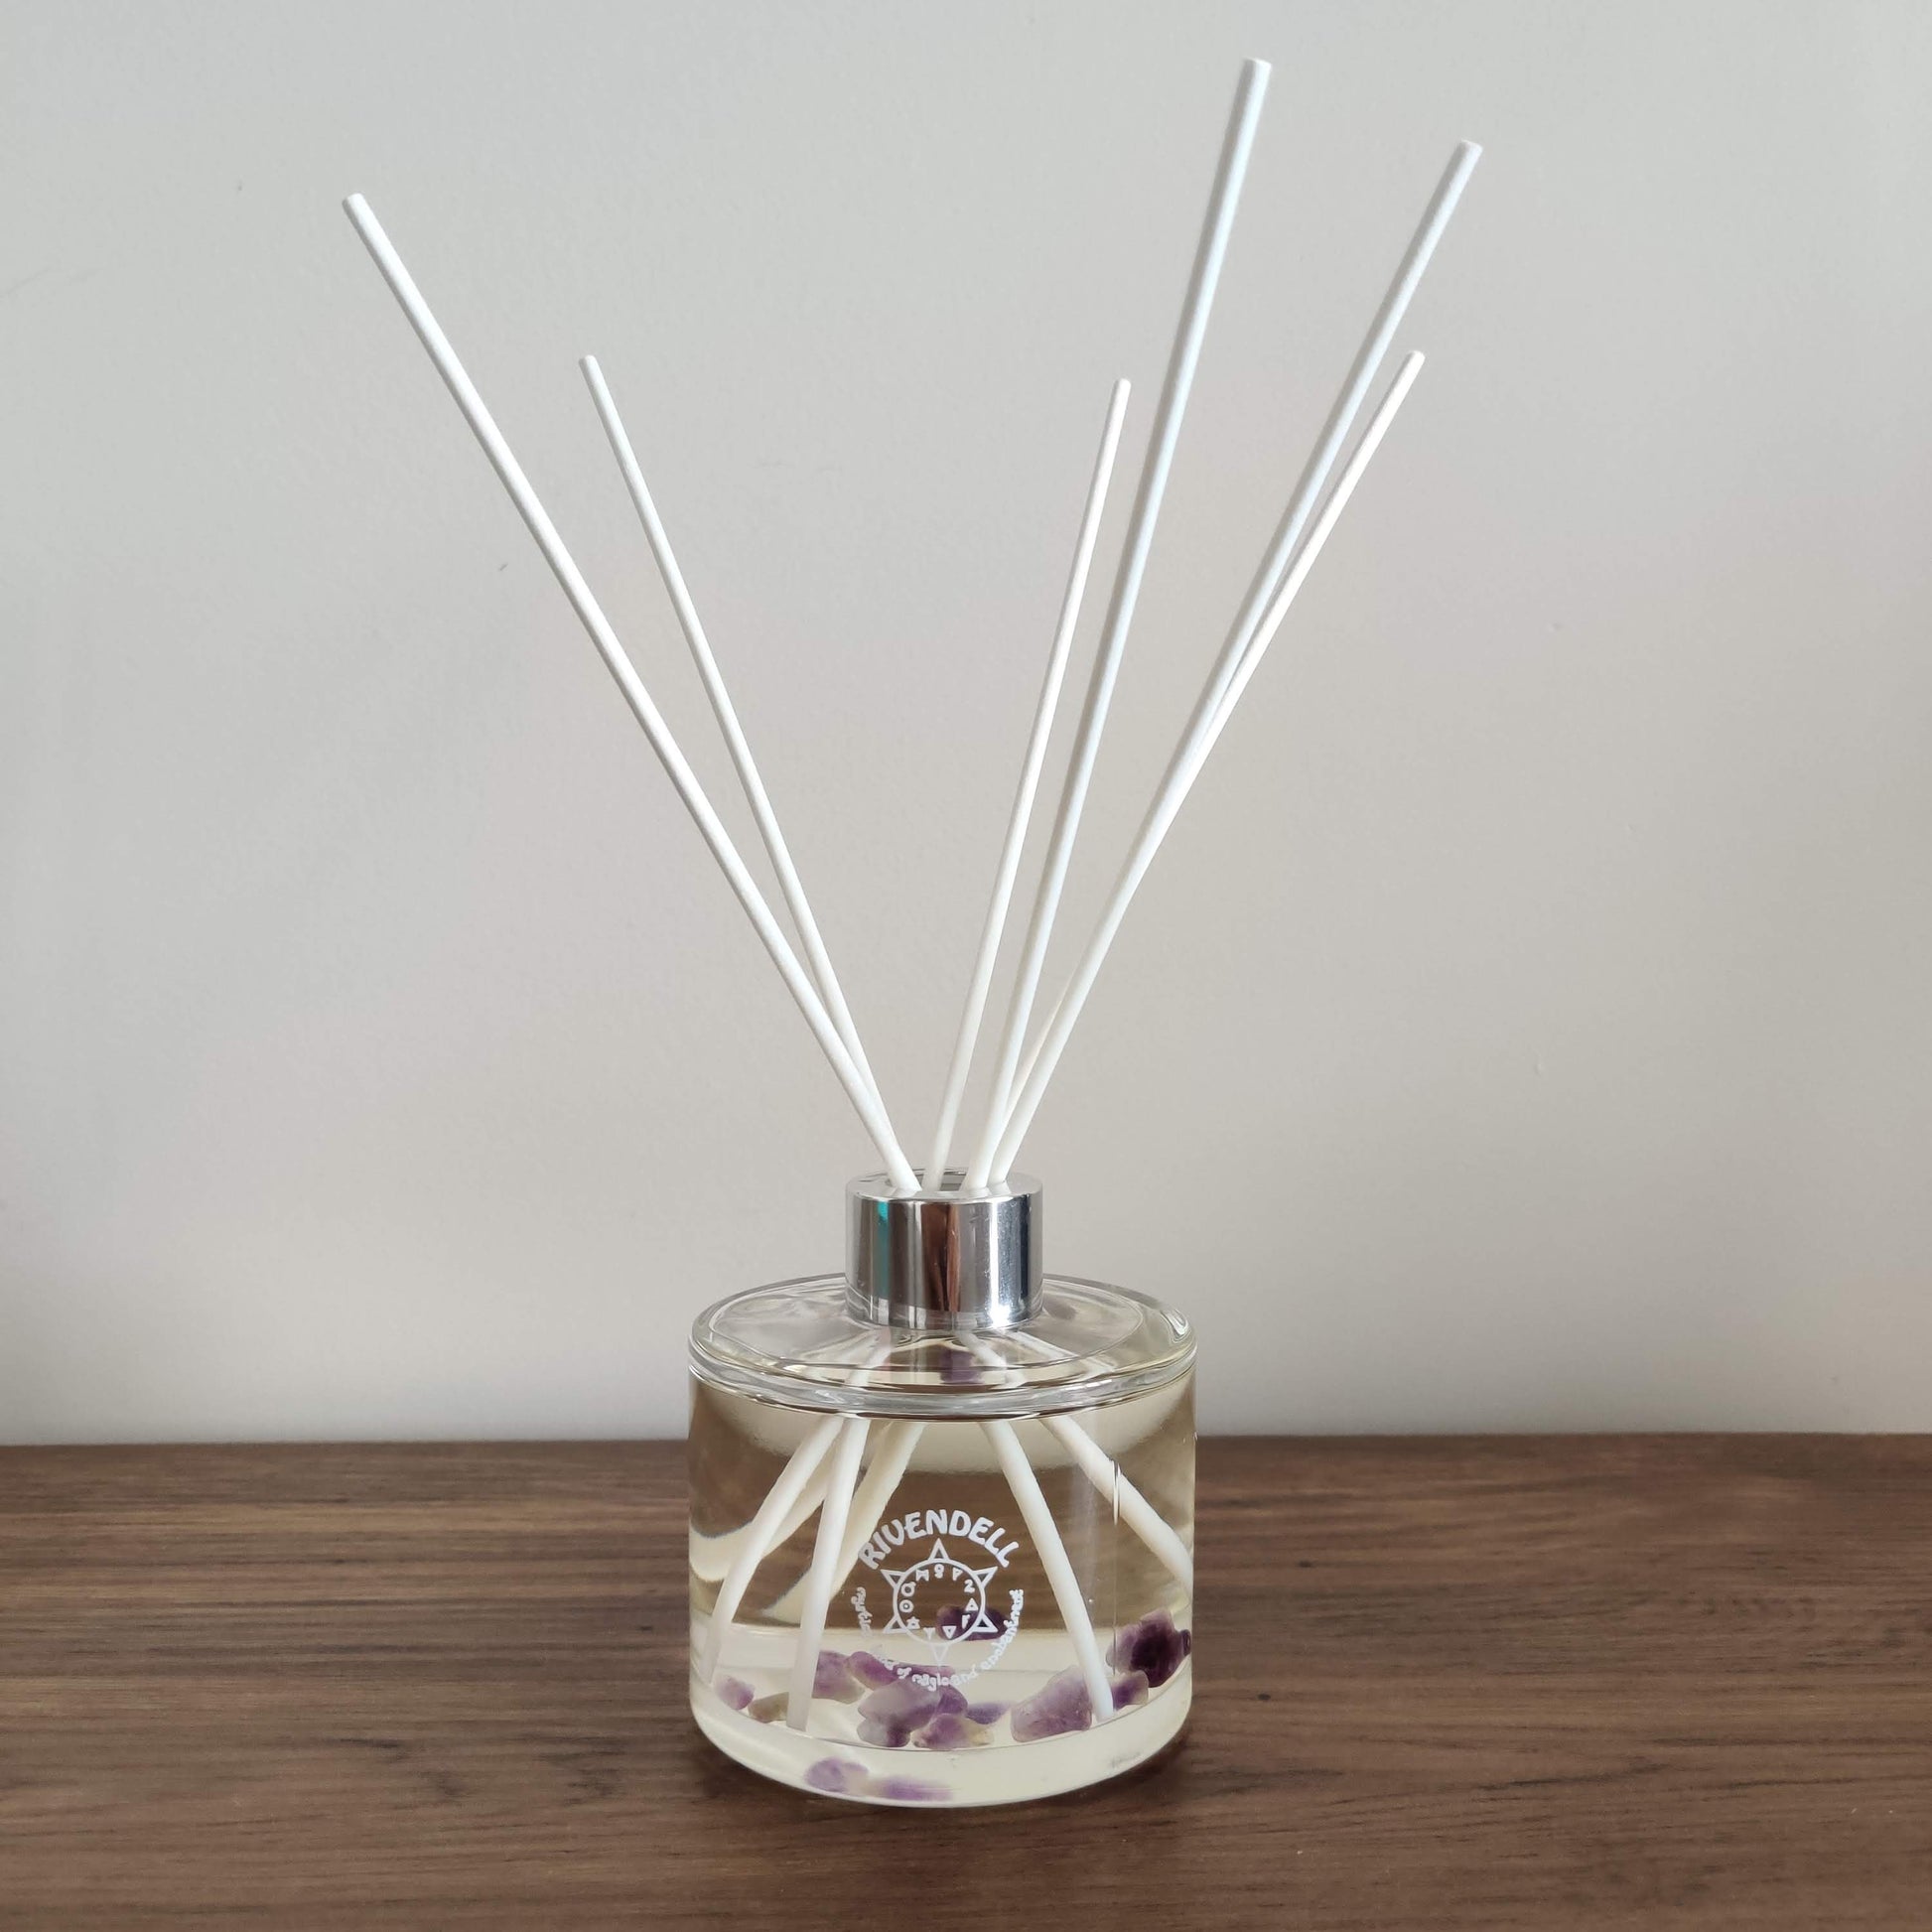 Rivendell Aroma: Amethyst x Black Cedar and Juniper Crystal-Infused Reed Diffuser - Rivendell Shop